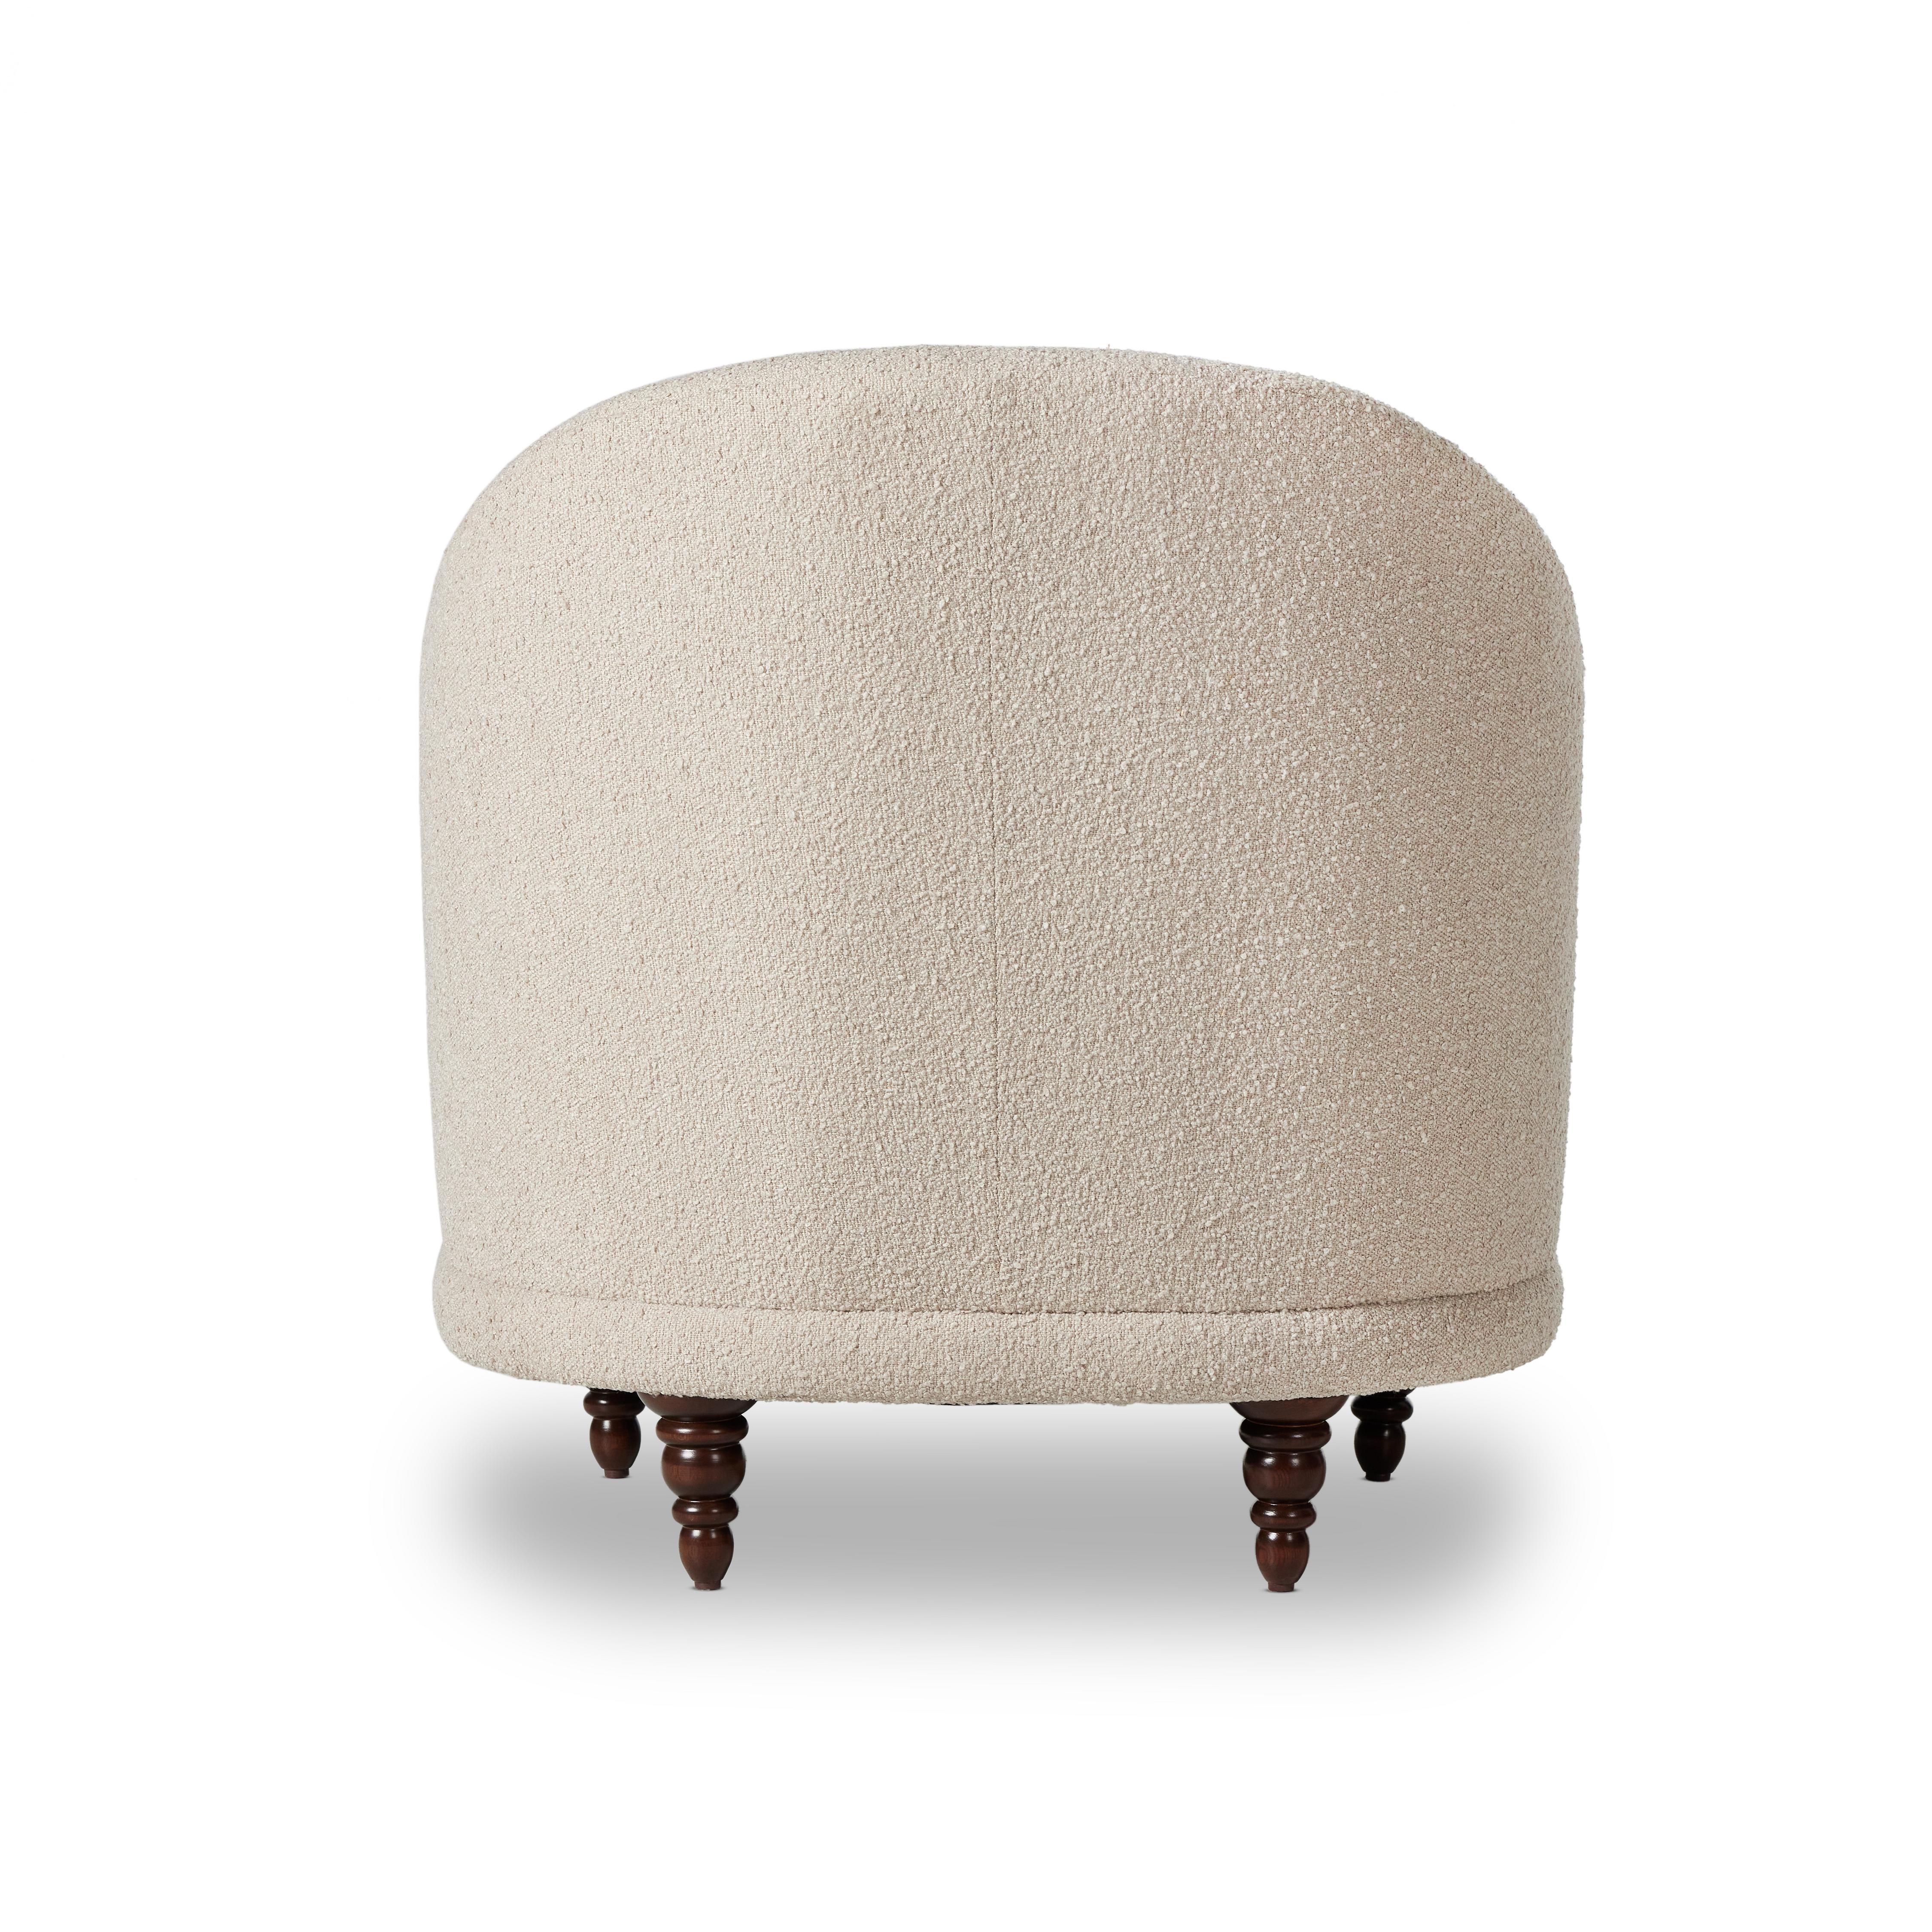 Marnie Chair-Knoll Sand - Image 5